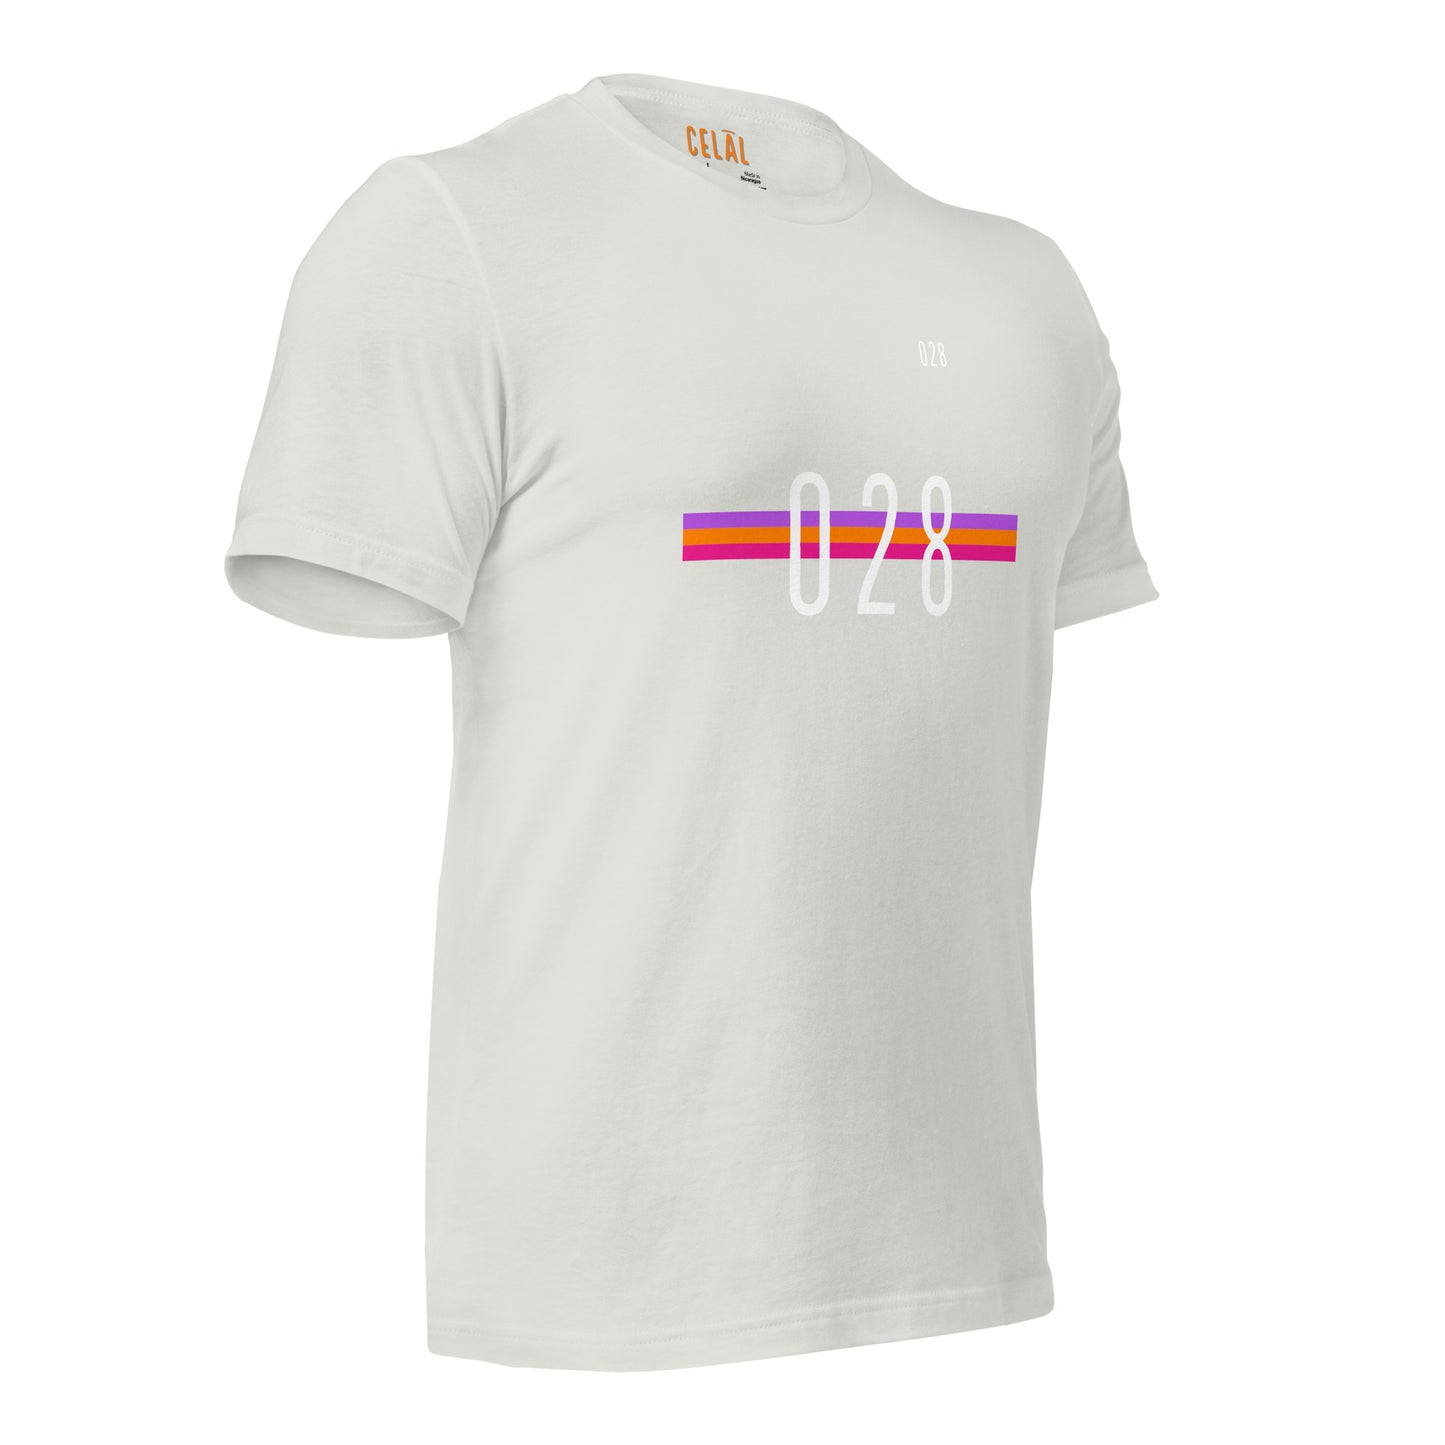 028 Unisex t-shirt